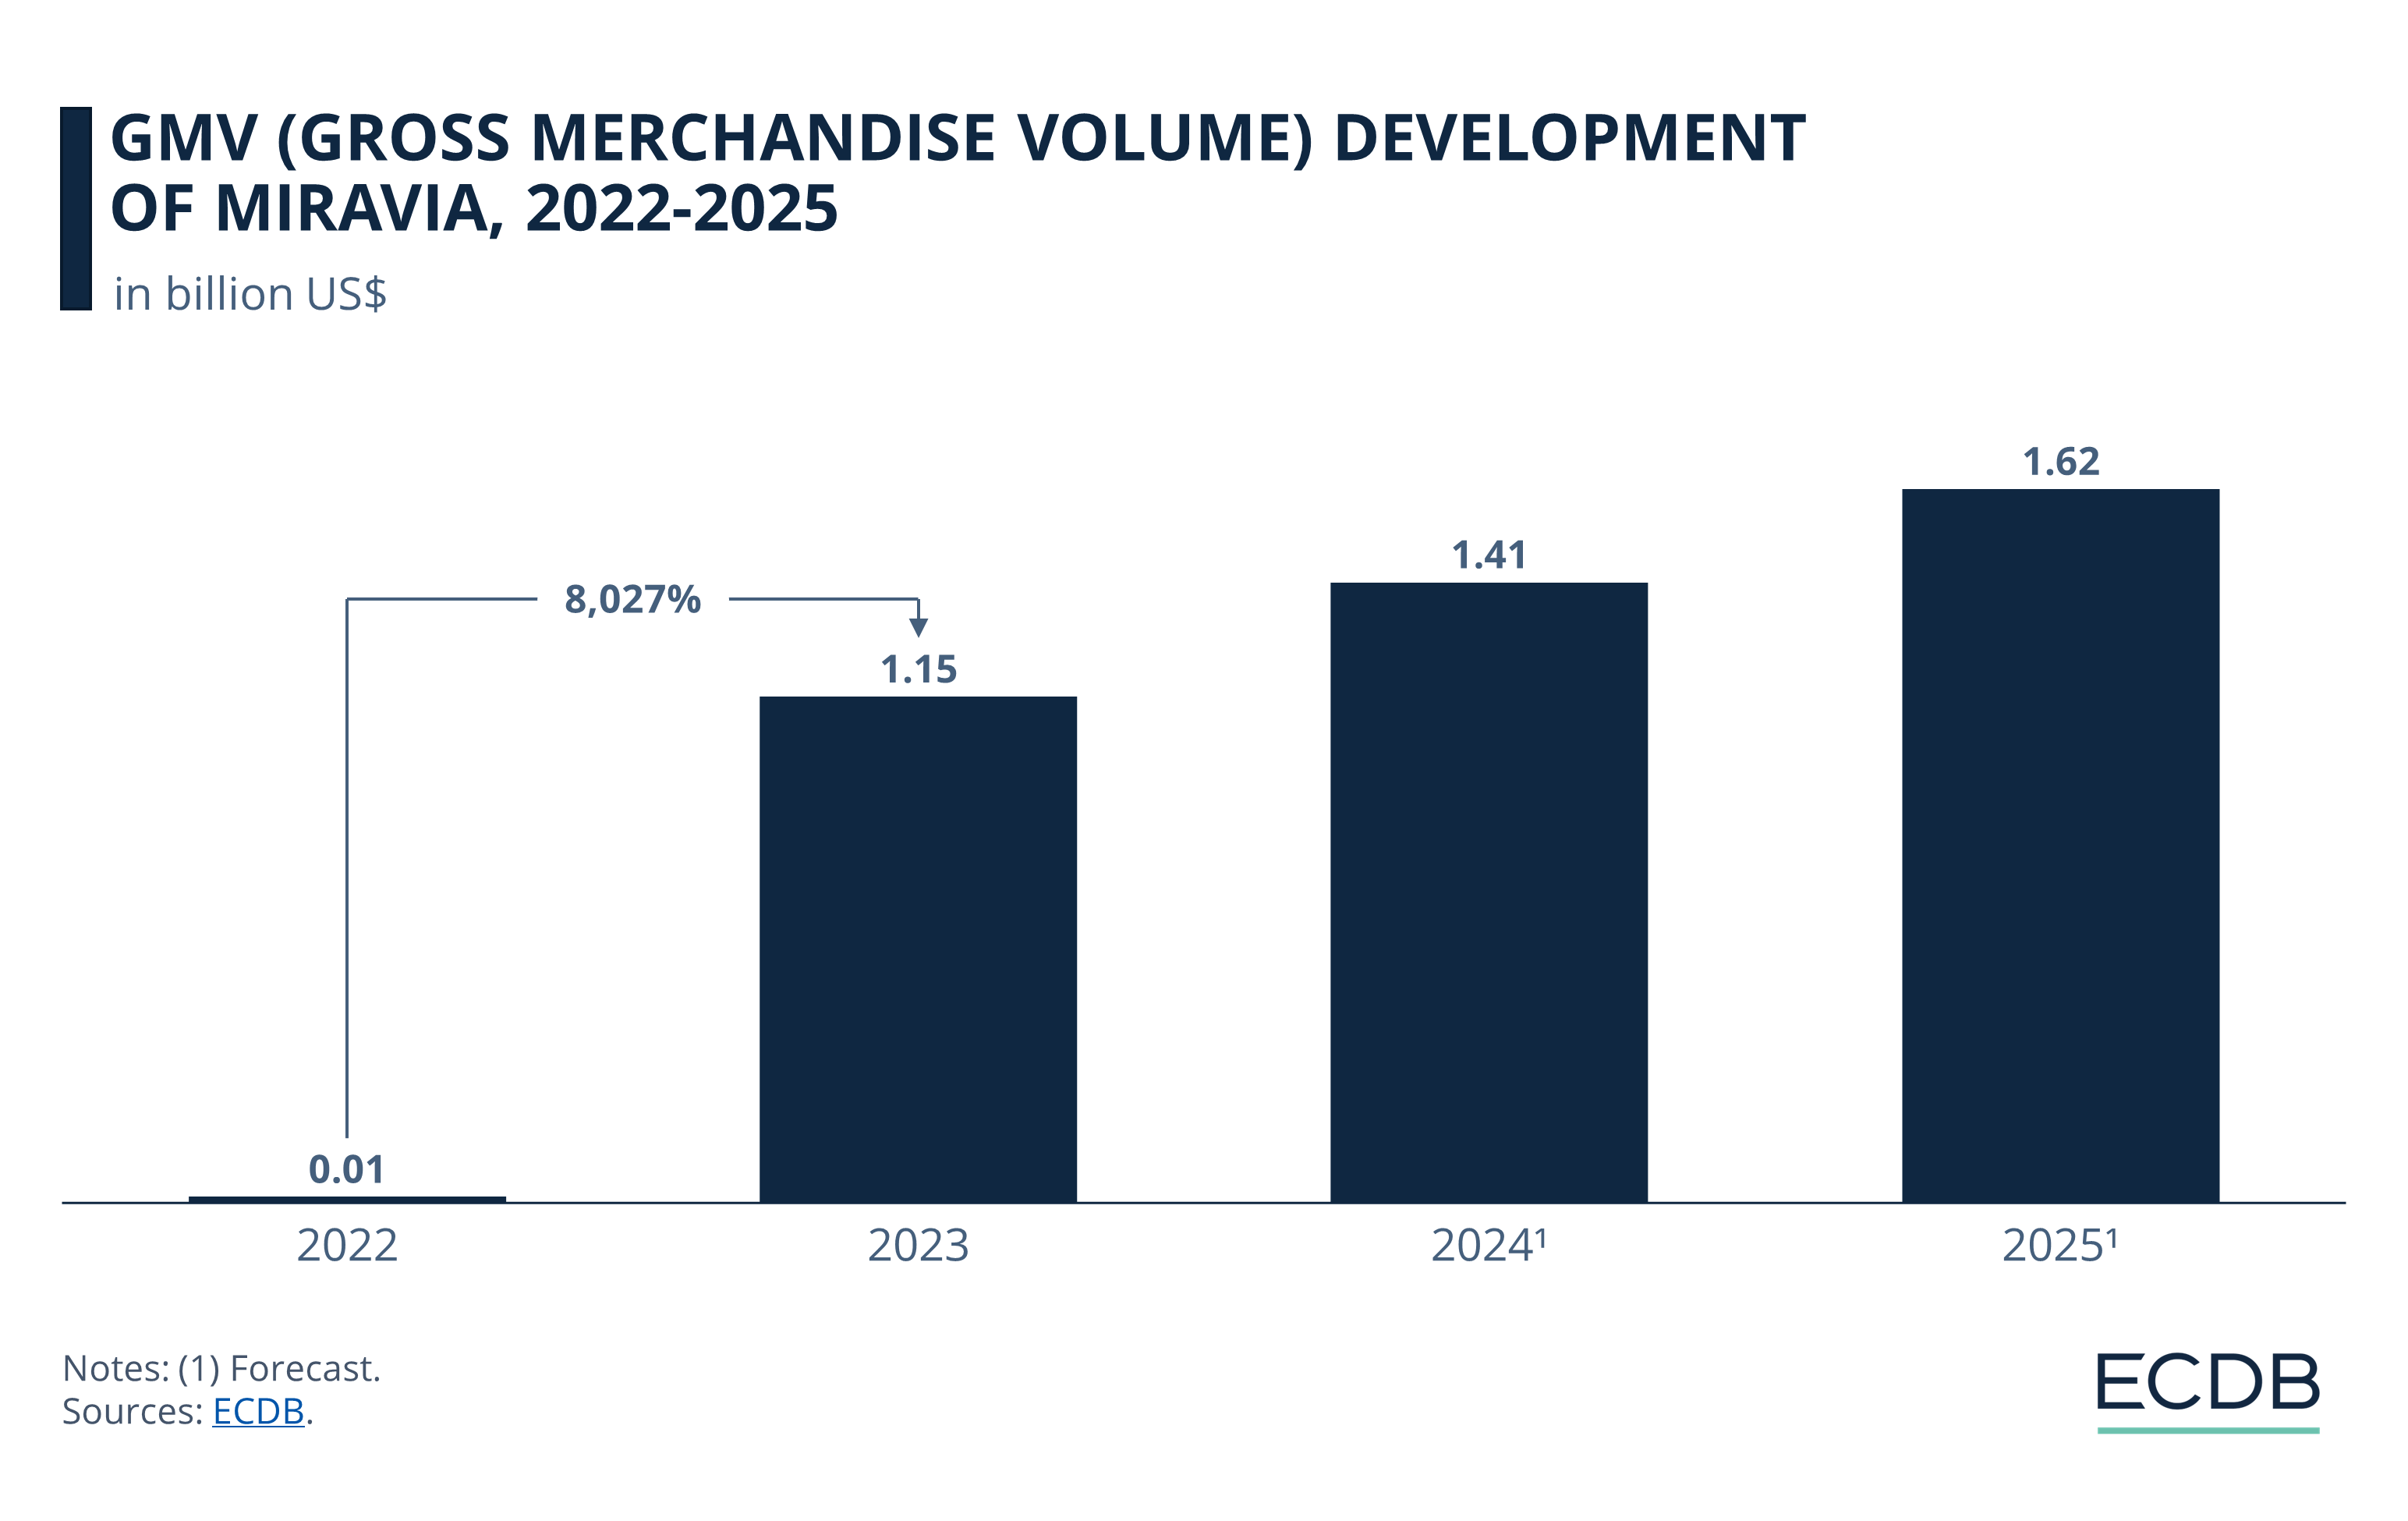 GMV (Gross Merchandise Volume) Development of Miravia, 2022-2025